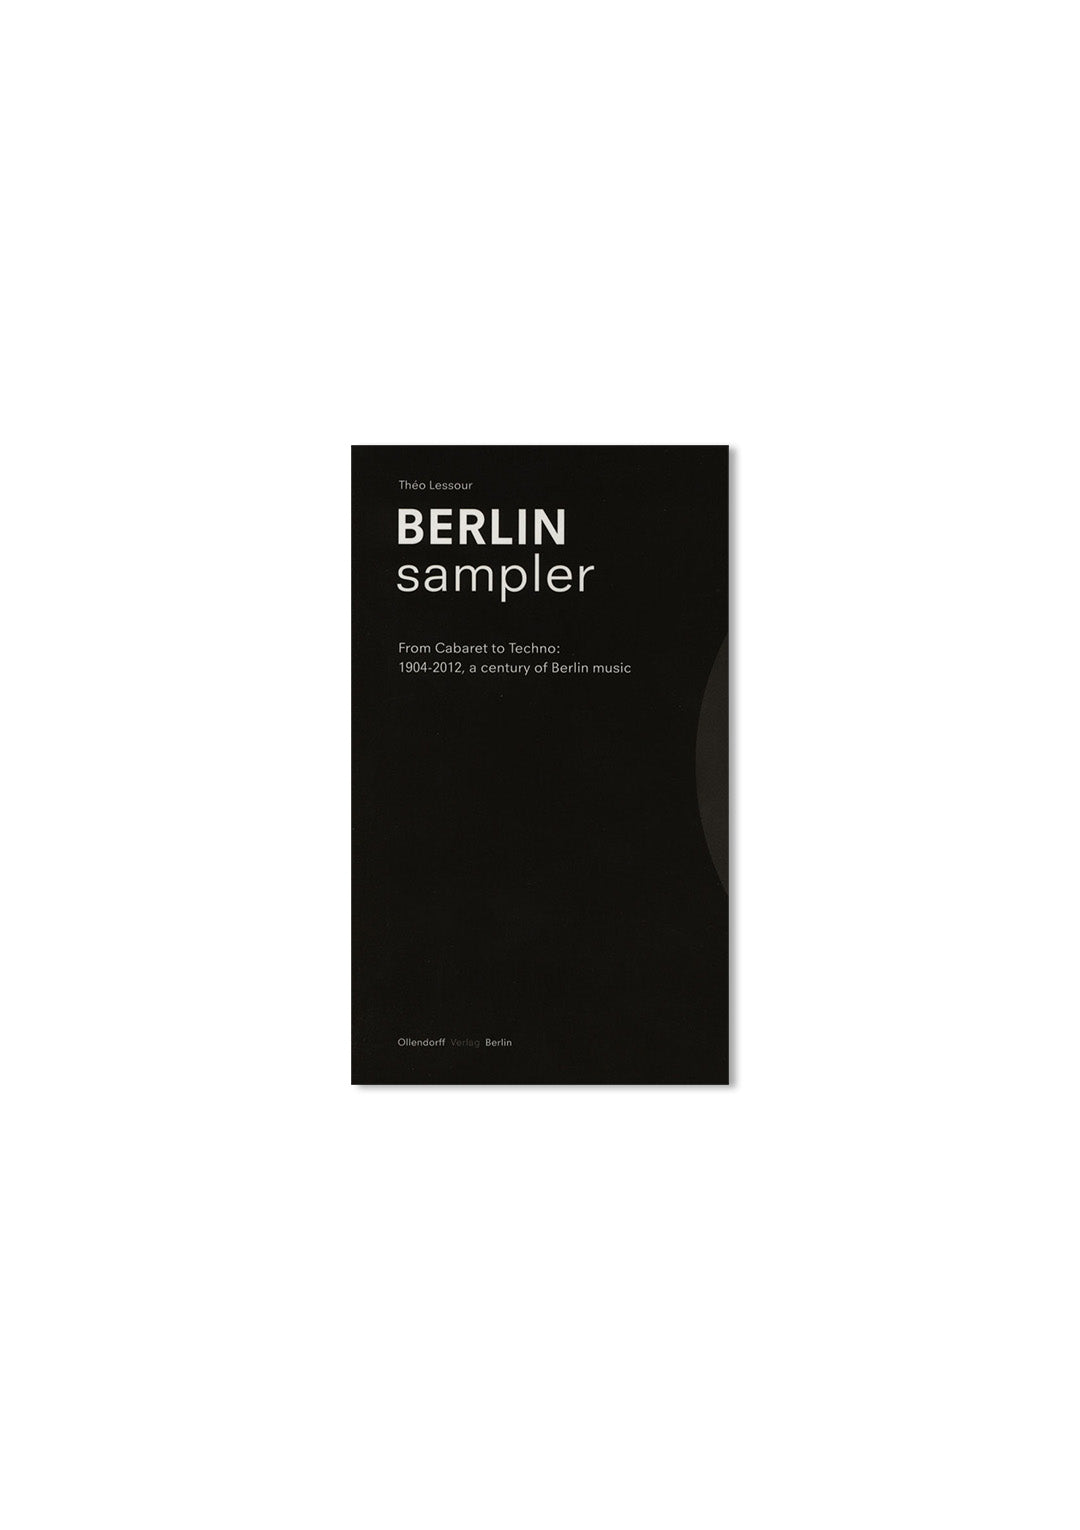 Berlin Sampler